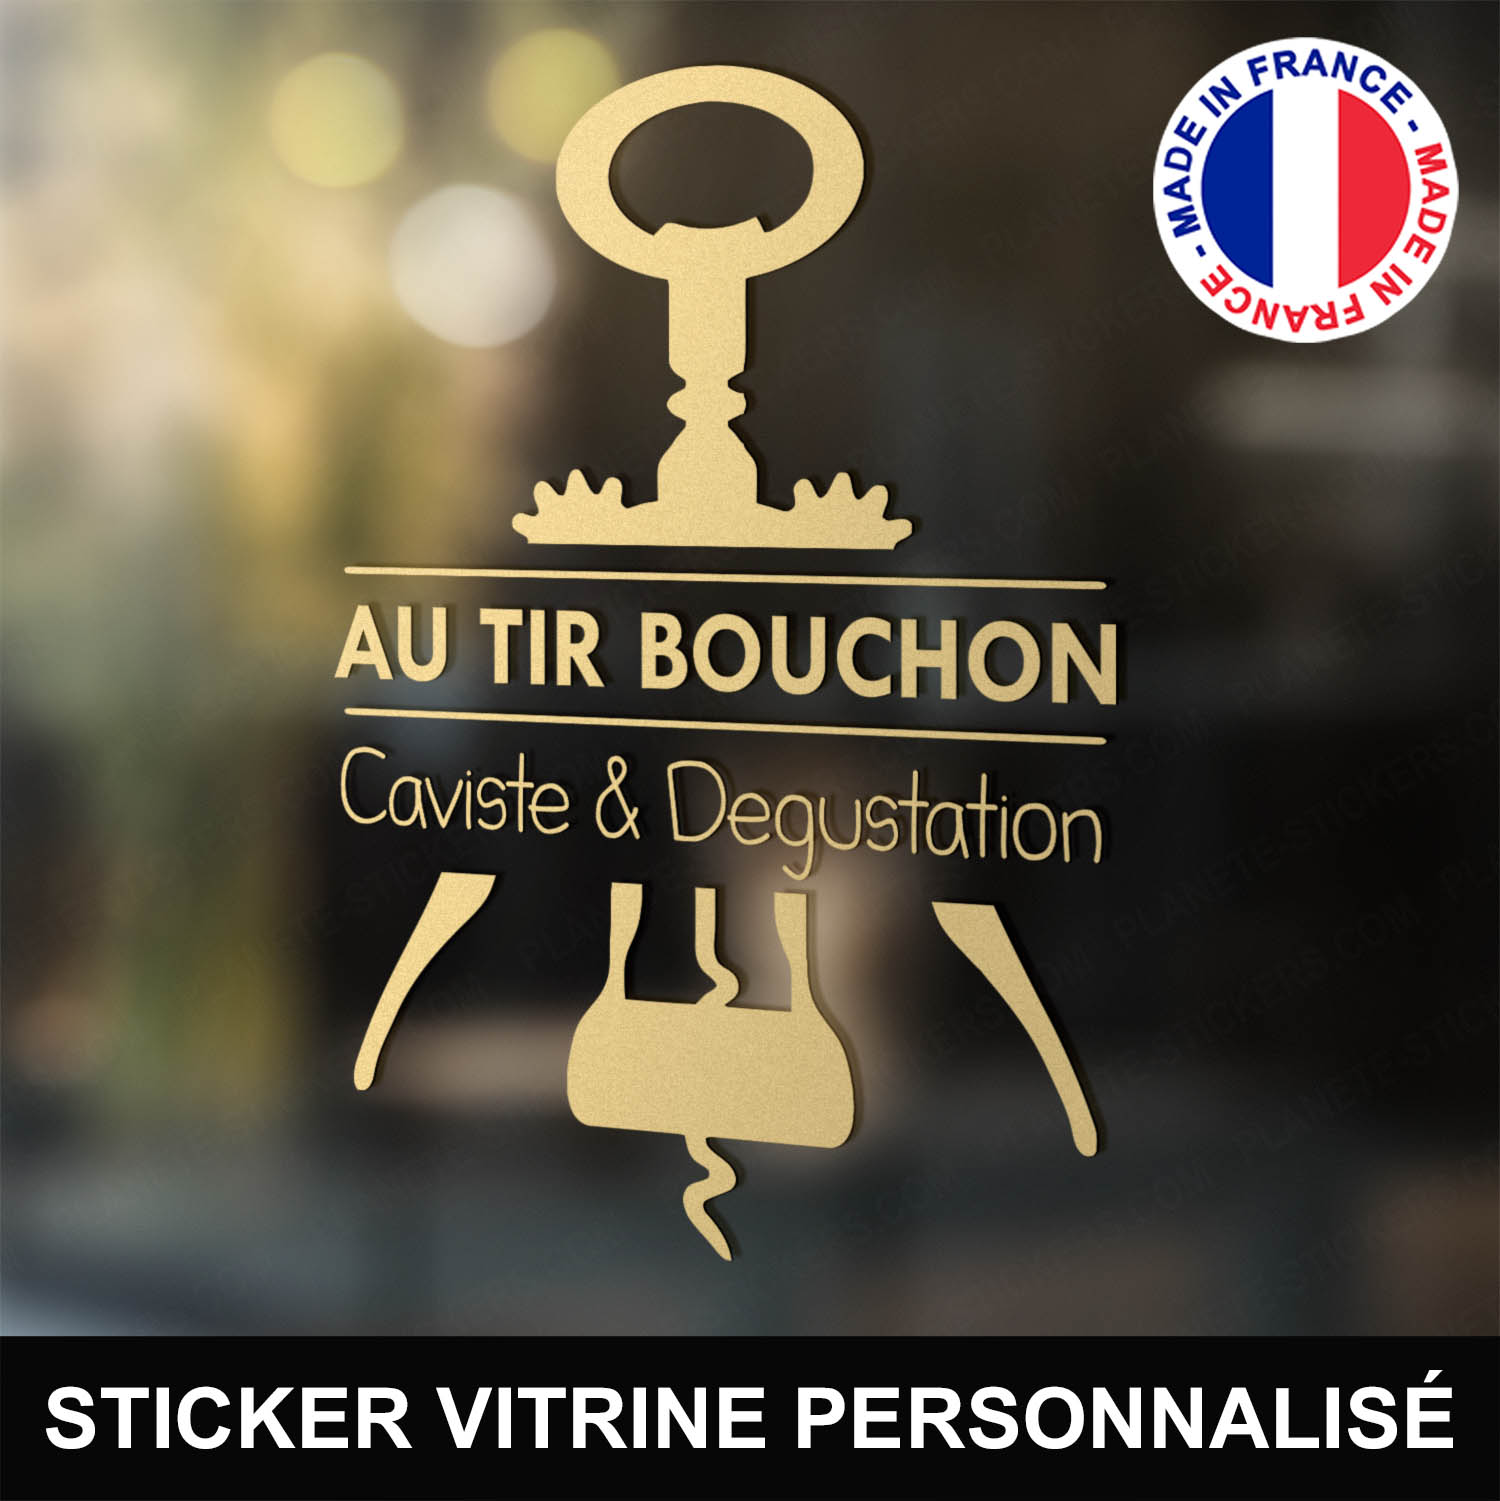 ref1cavistevitrine-stickers-caviste-vitrine-sticker-personnalisé-autocollant-vin-boutique-pro-degustation-tir-bouchon-professionnel